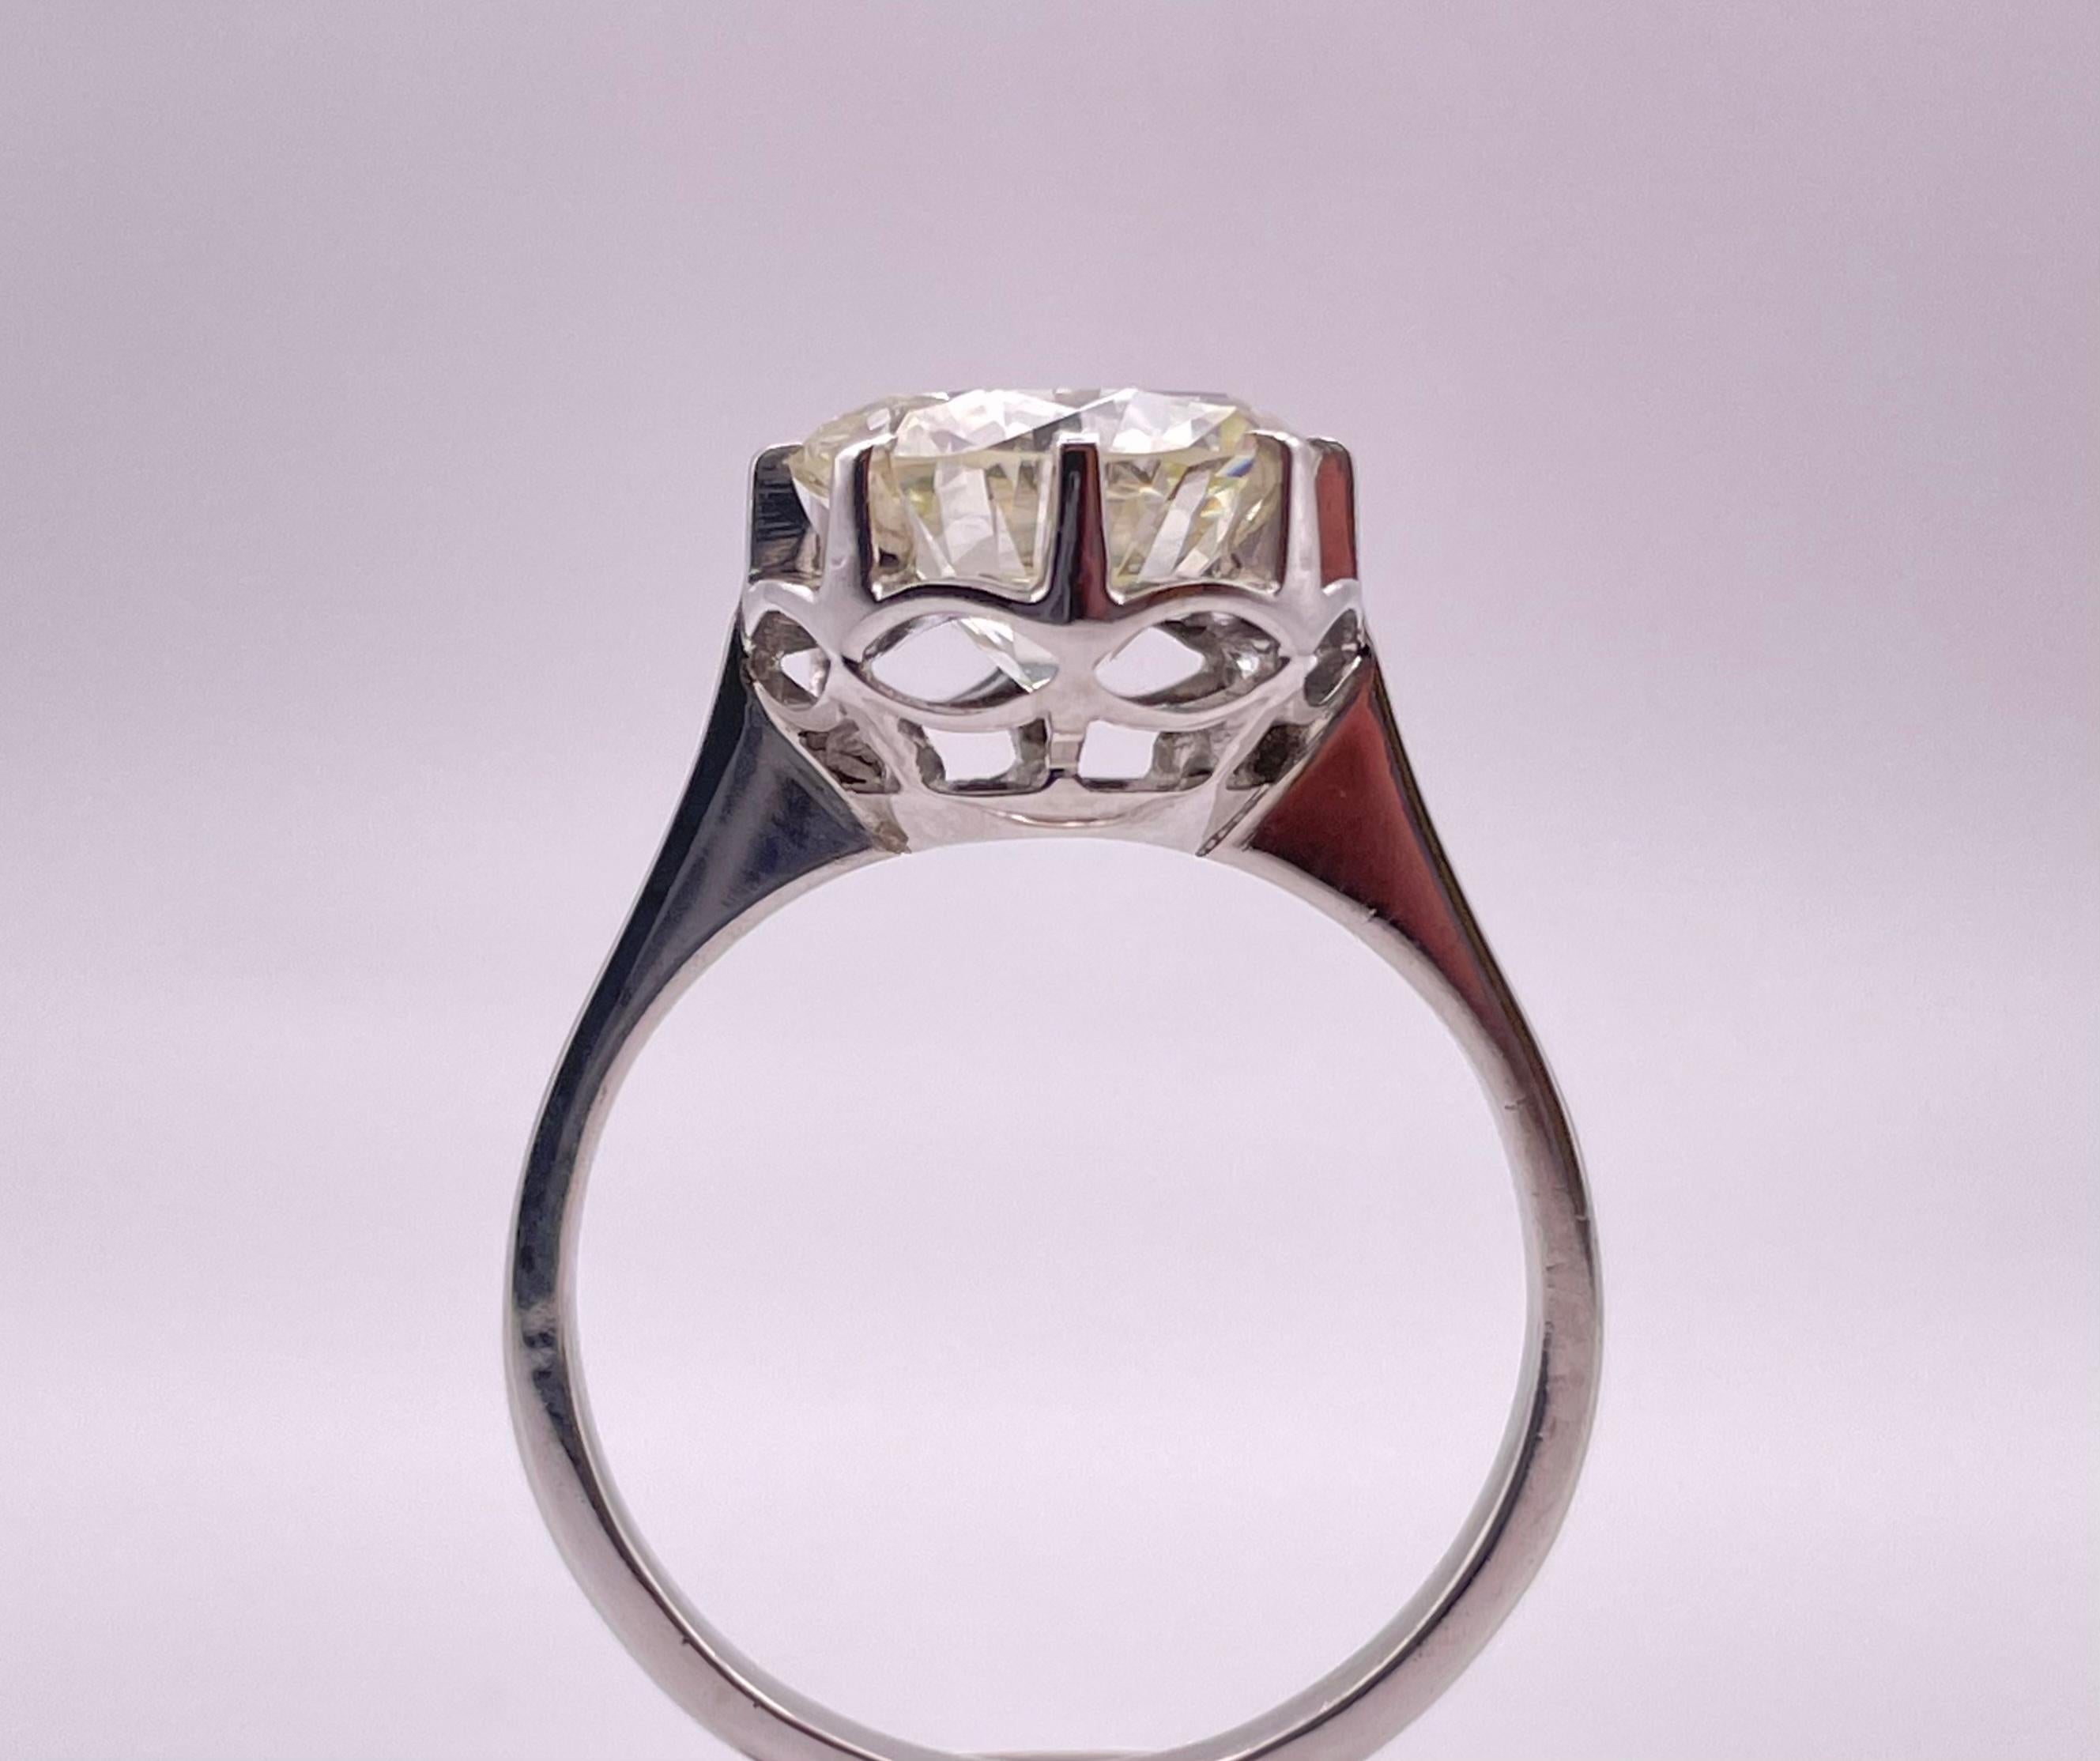 Brilliant Cut Art Deco 2.91 Carat Old Cut Diamond Solitaire Engagement Ring, circa 1950